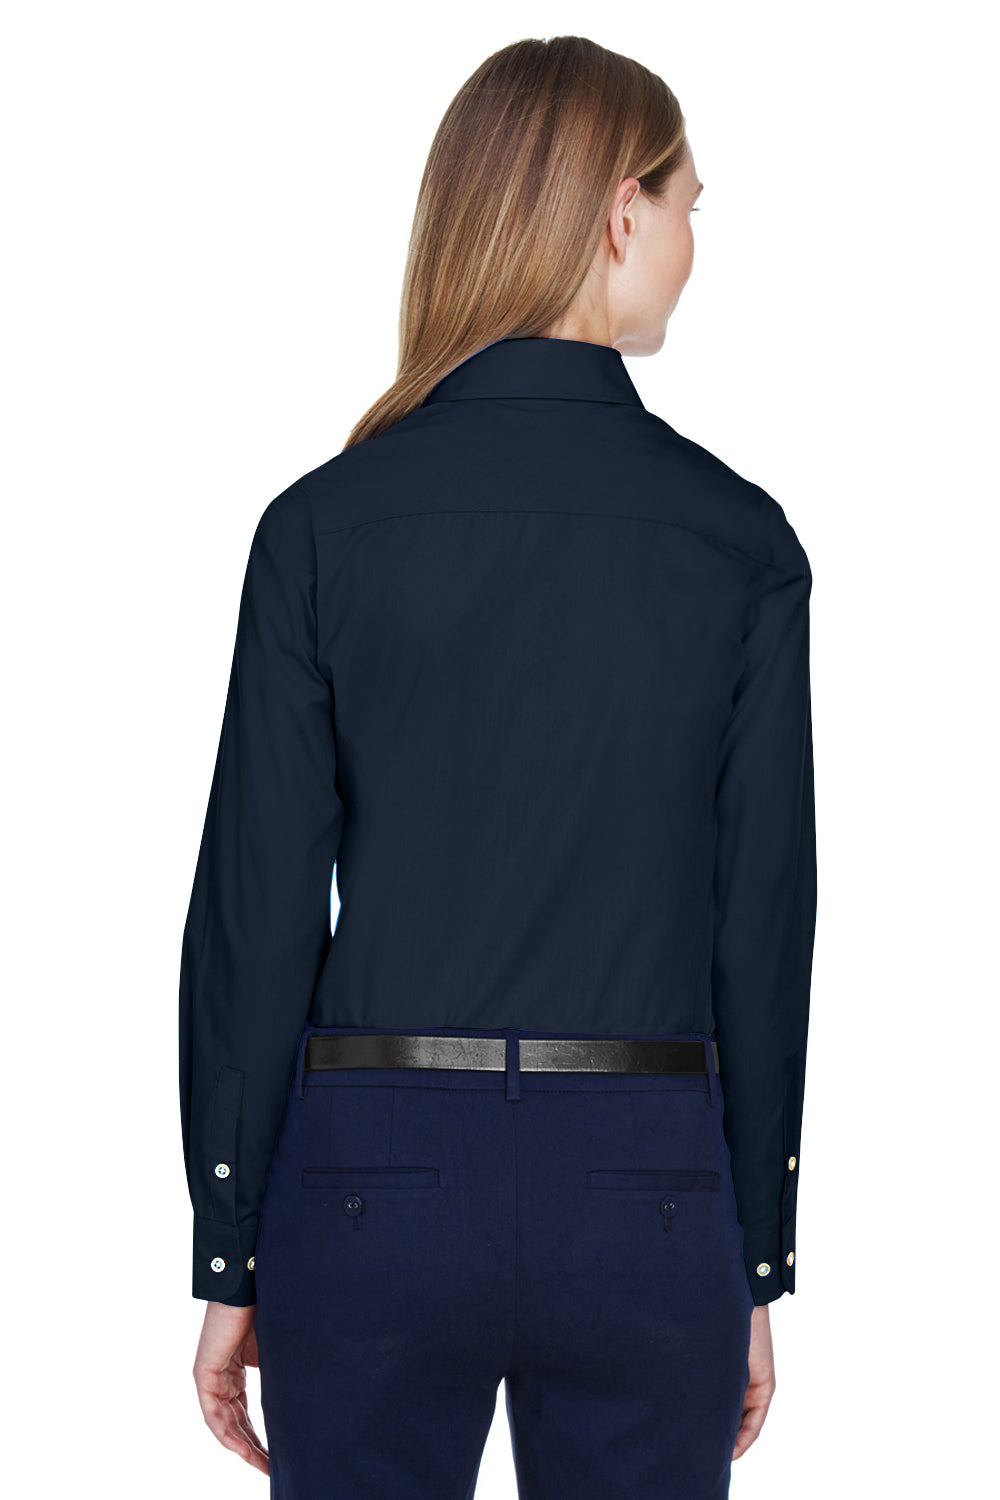 Devon & Jones D620W Womens Crown Woven Collection Wrinkle Resistant Long Sleeve Button Down Shirt Navy Blue Back